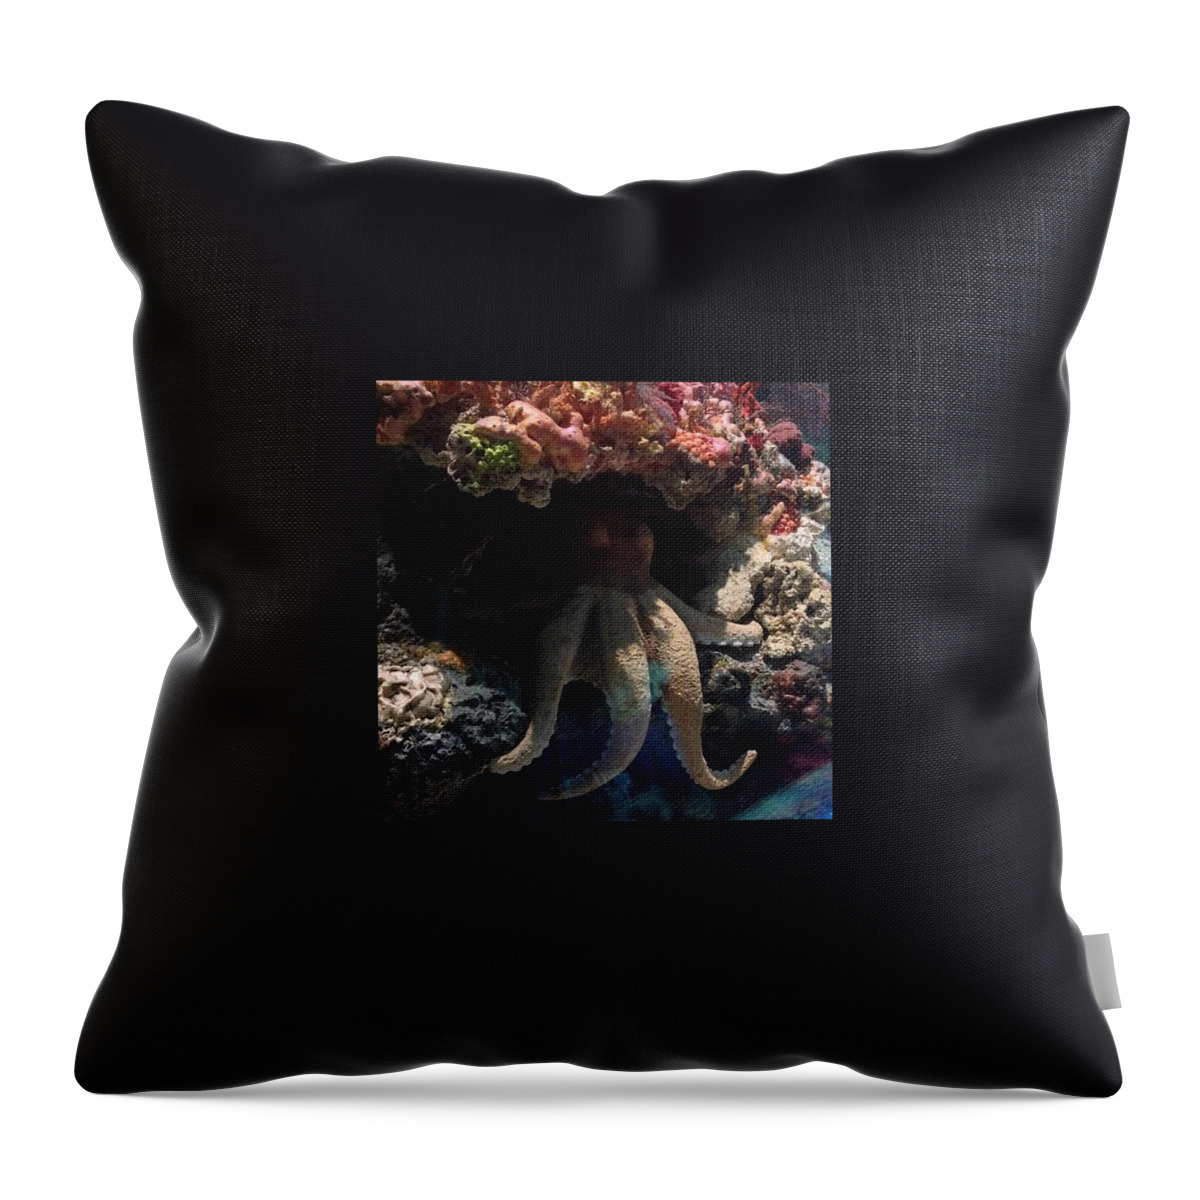  Throw Pillow featuring the photograph Octopus by Daniel Eskridge